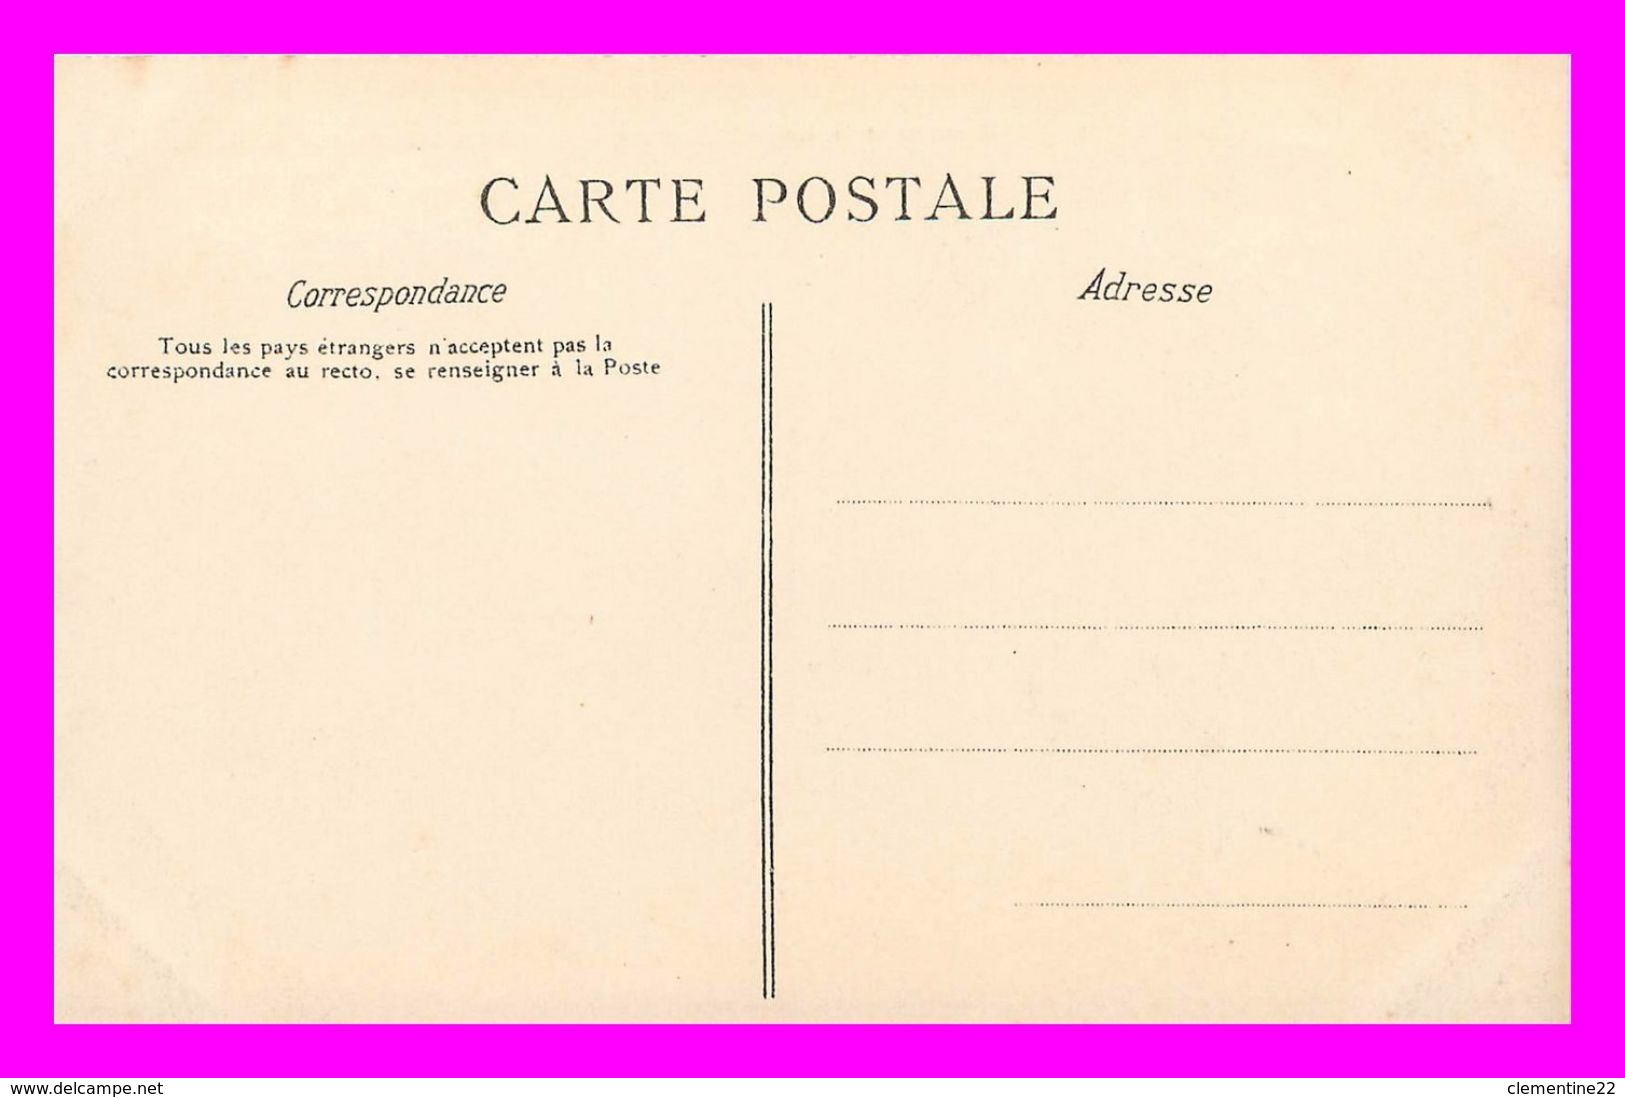 Thème Chateau - Orvault  - Chateau    (scan Recto Et Verso) - Orvault